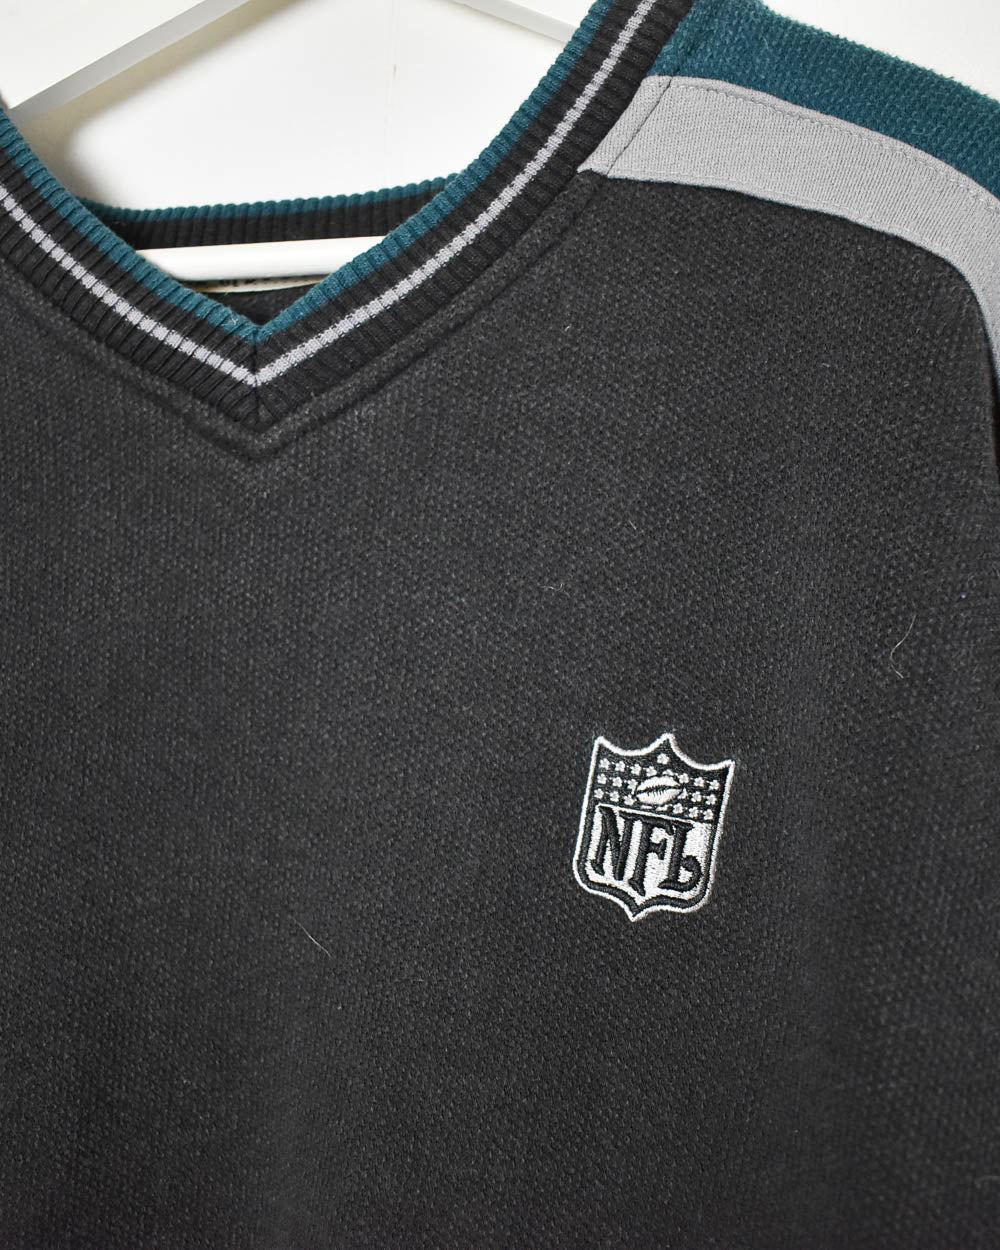 Black NFL Sweatshirt - Large